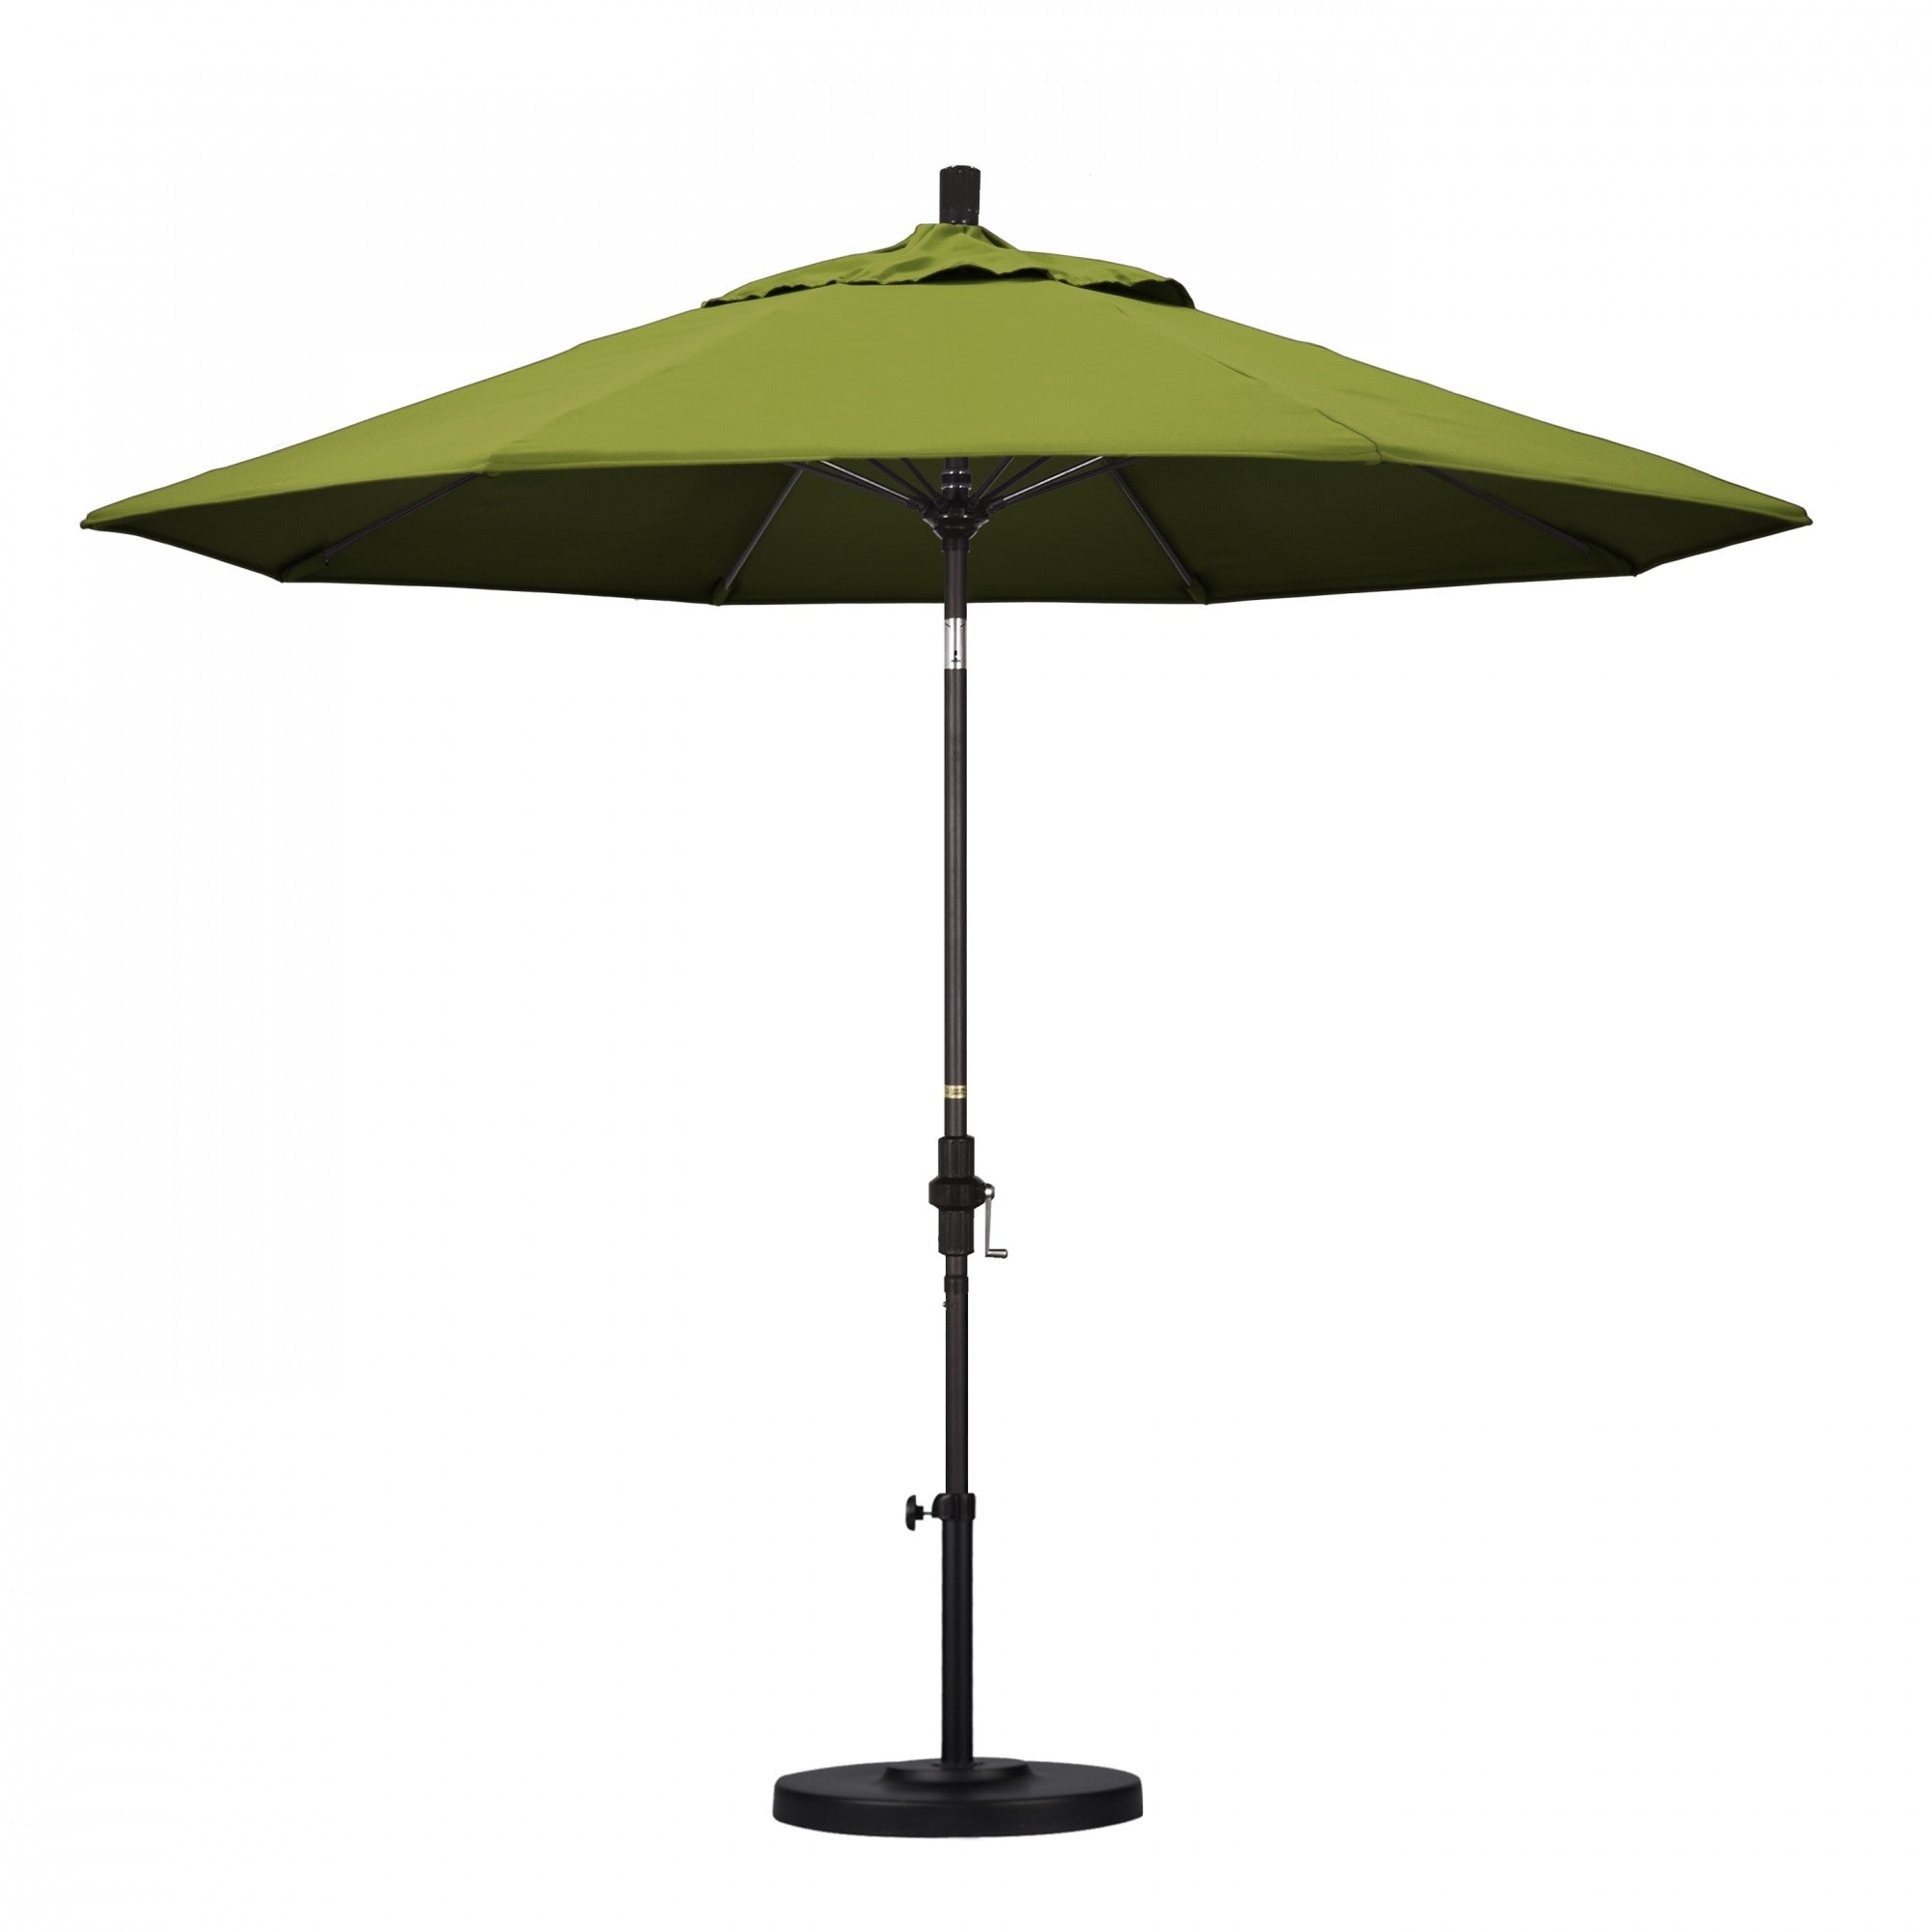 California Umbrella - 9' - Patio Umbrella Umbrella - Aluminum Pole - Kiwi - Olefin - GSCUF908117-F55